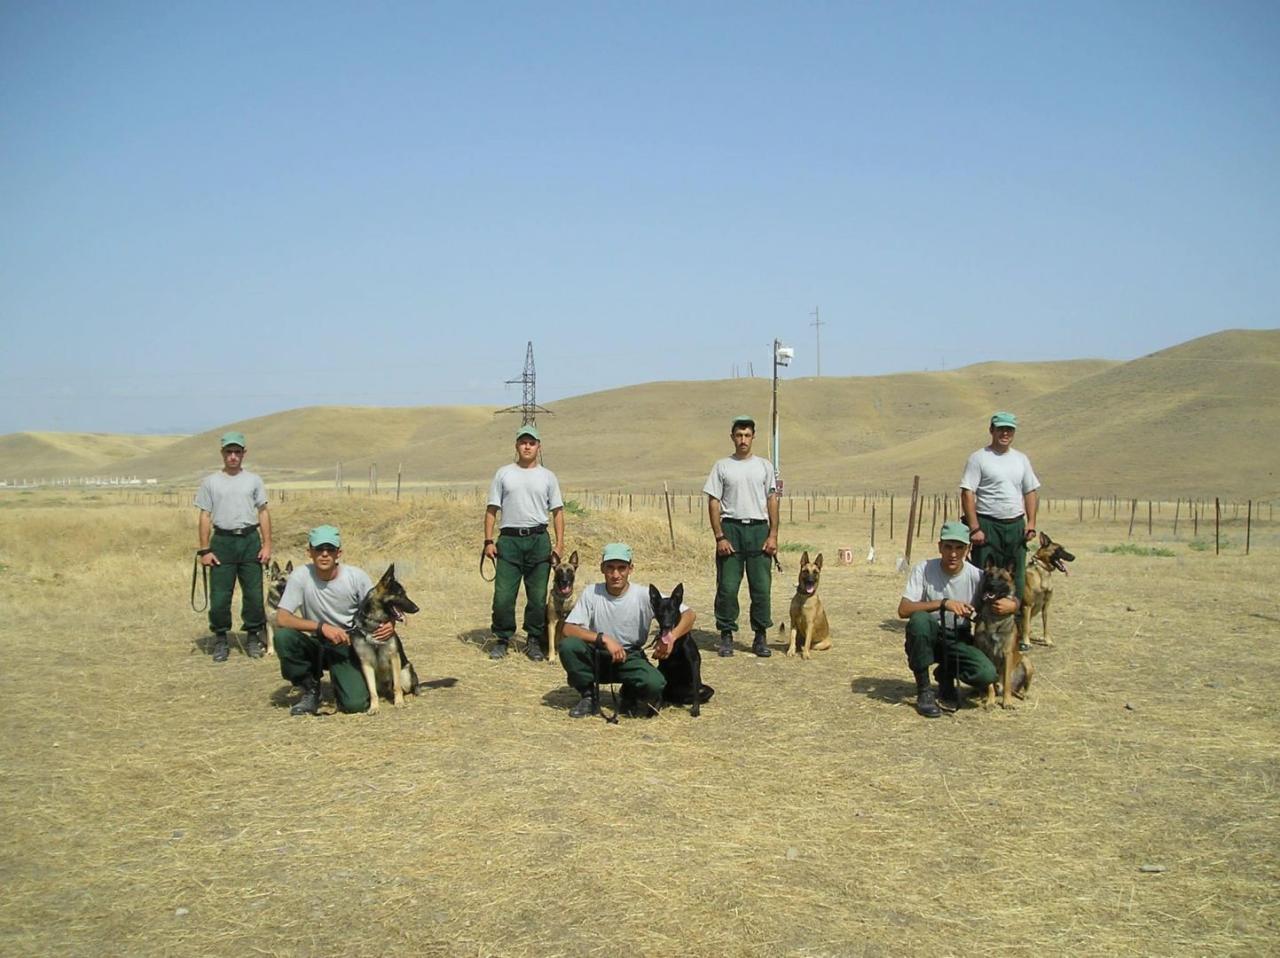 U.S. to donate 30 more mine detection dogs to Azerbaijan